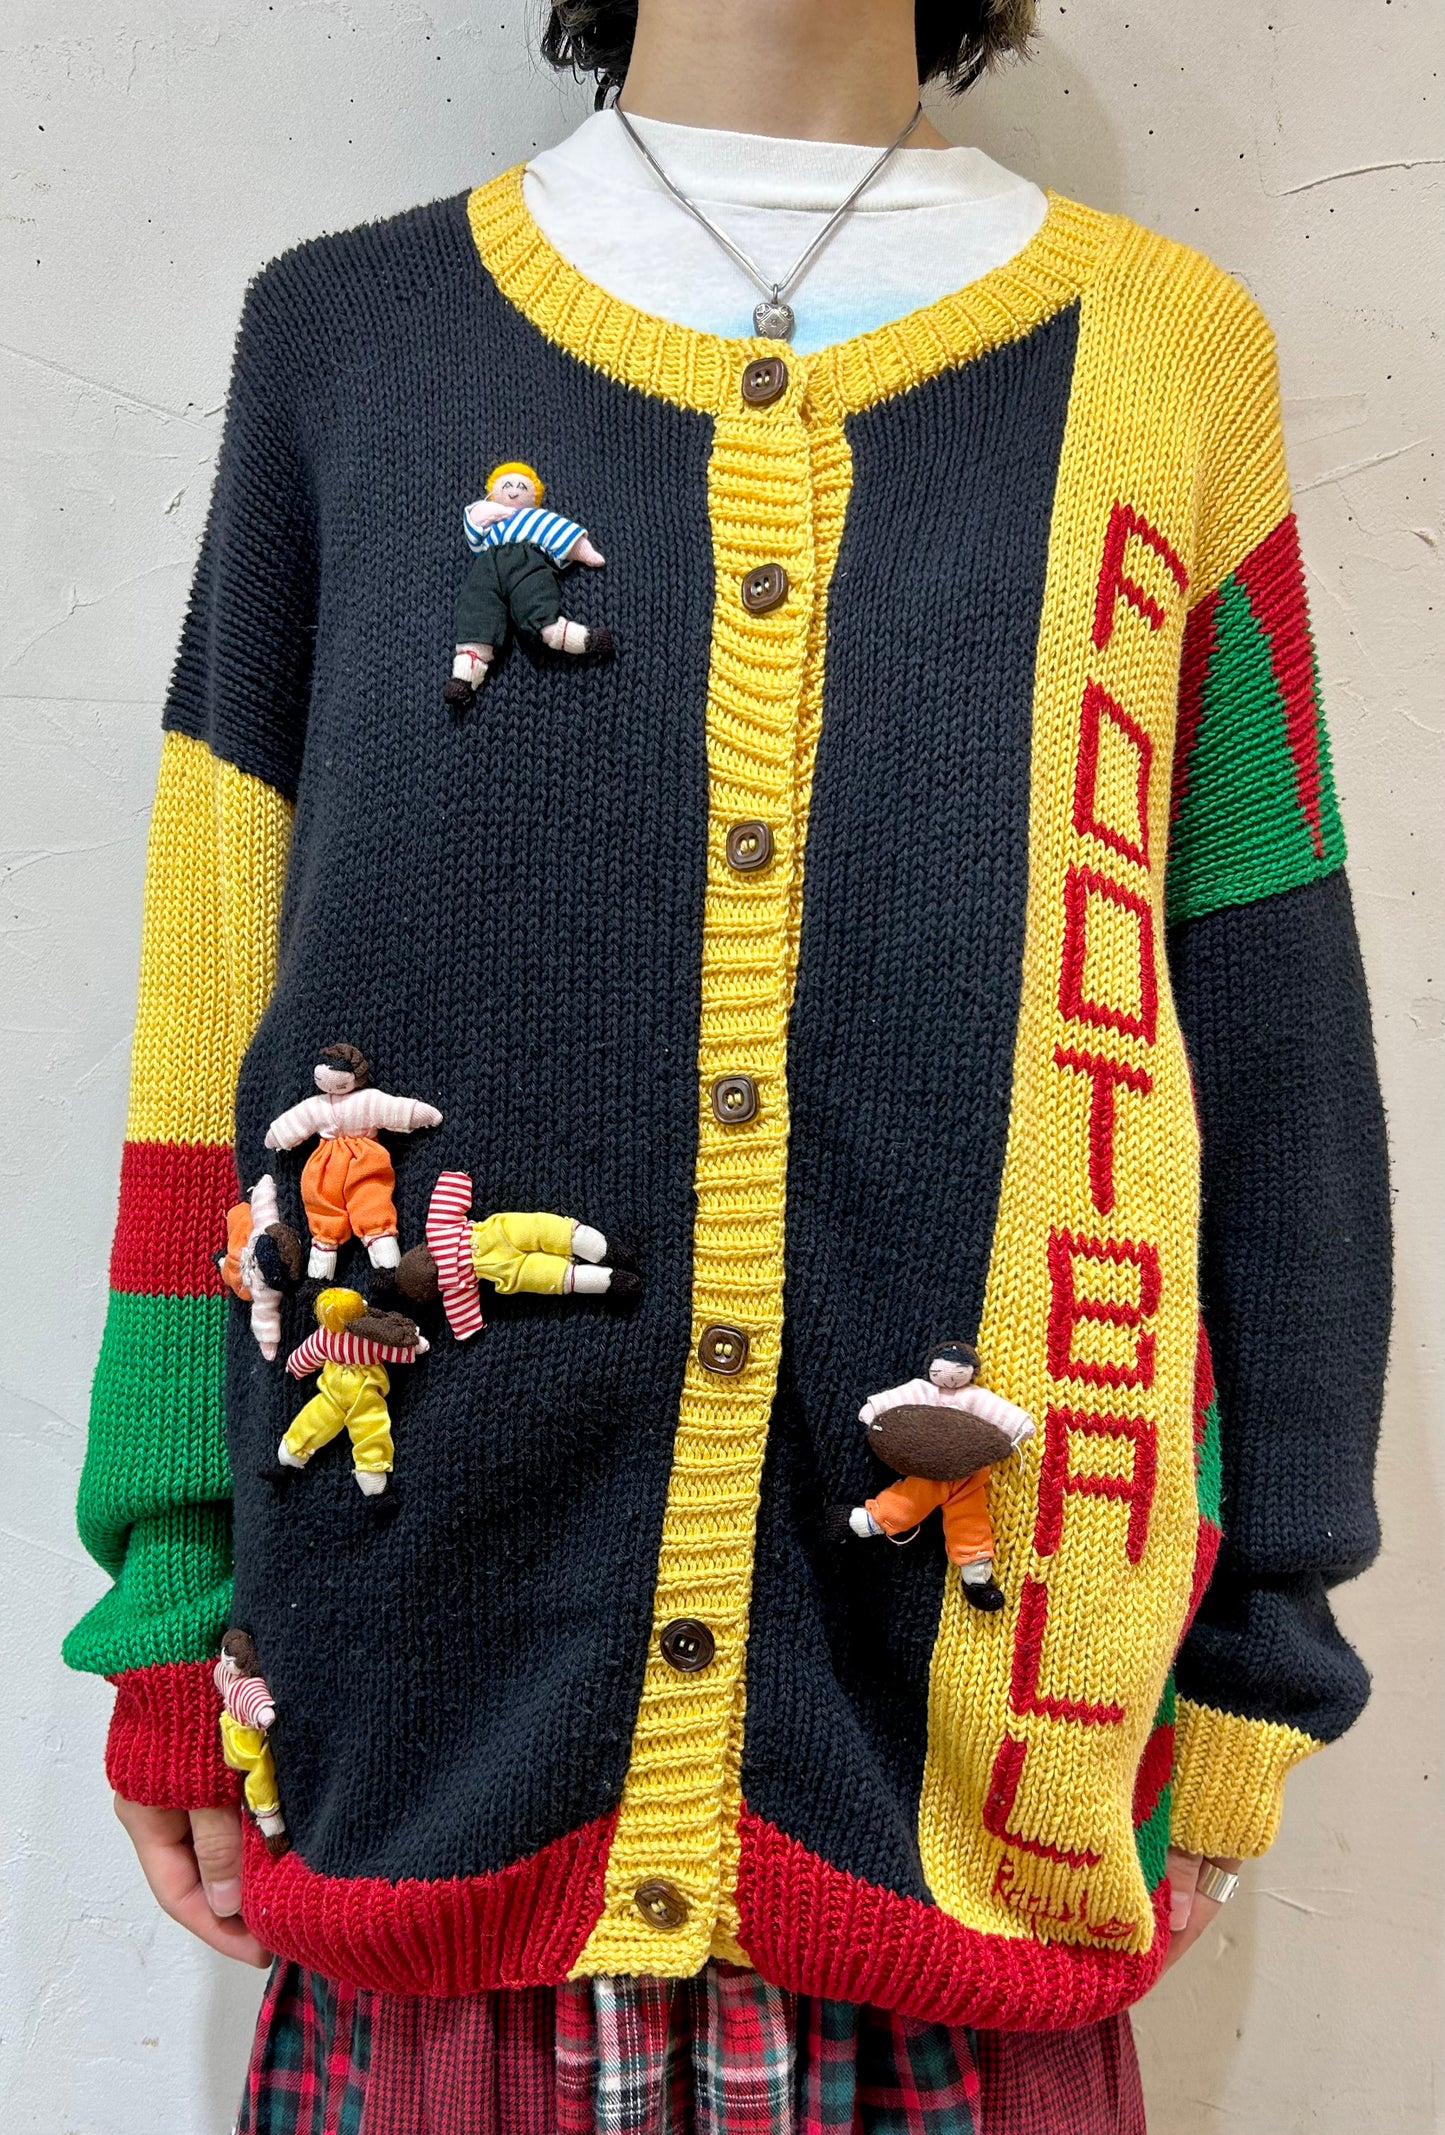 Vintage Cotton Knit Cardigan 〜RAQUEL〜 [I24907]